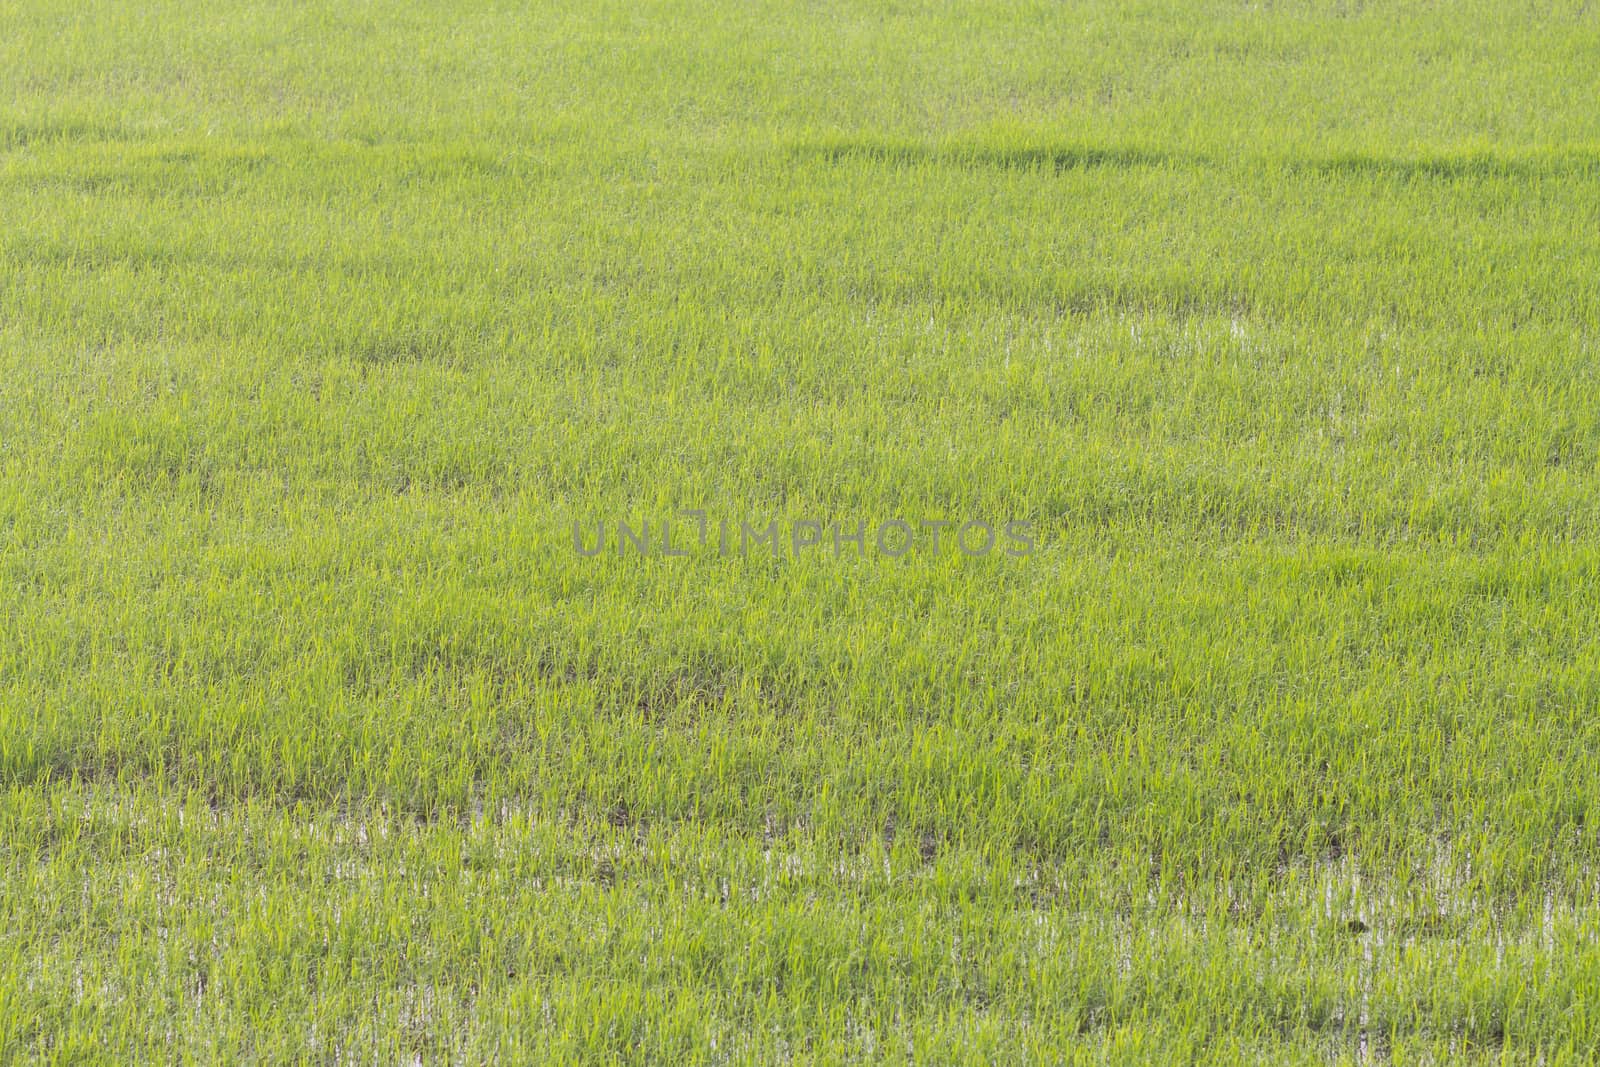 Paddy rice - Rice field  by kritsada1992